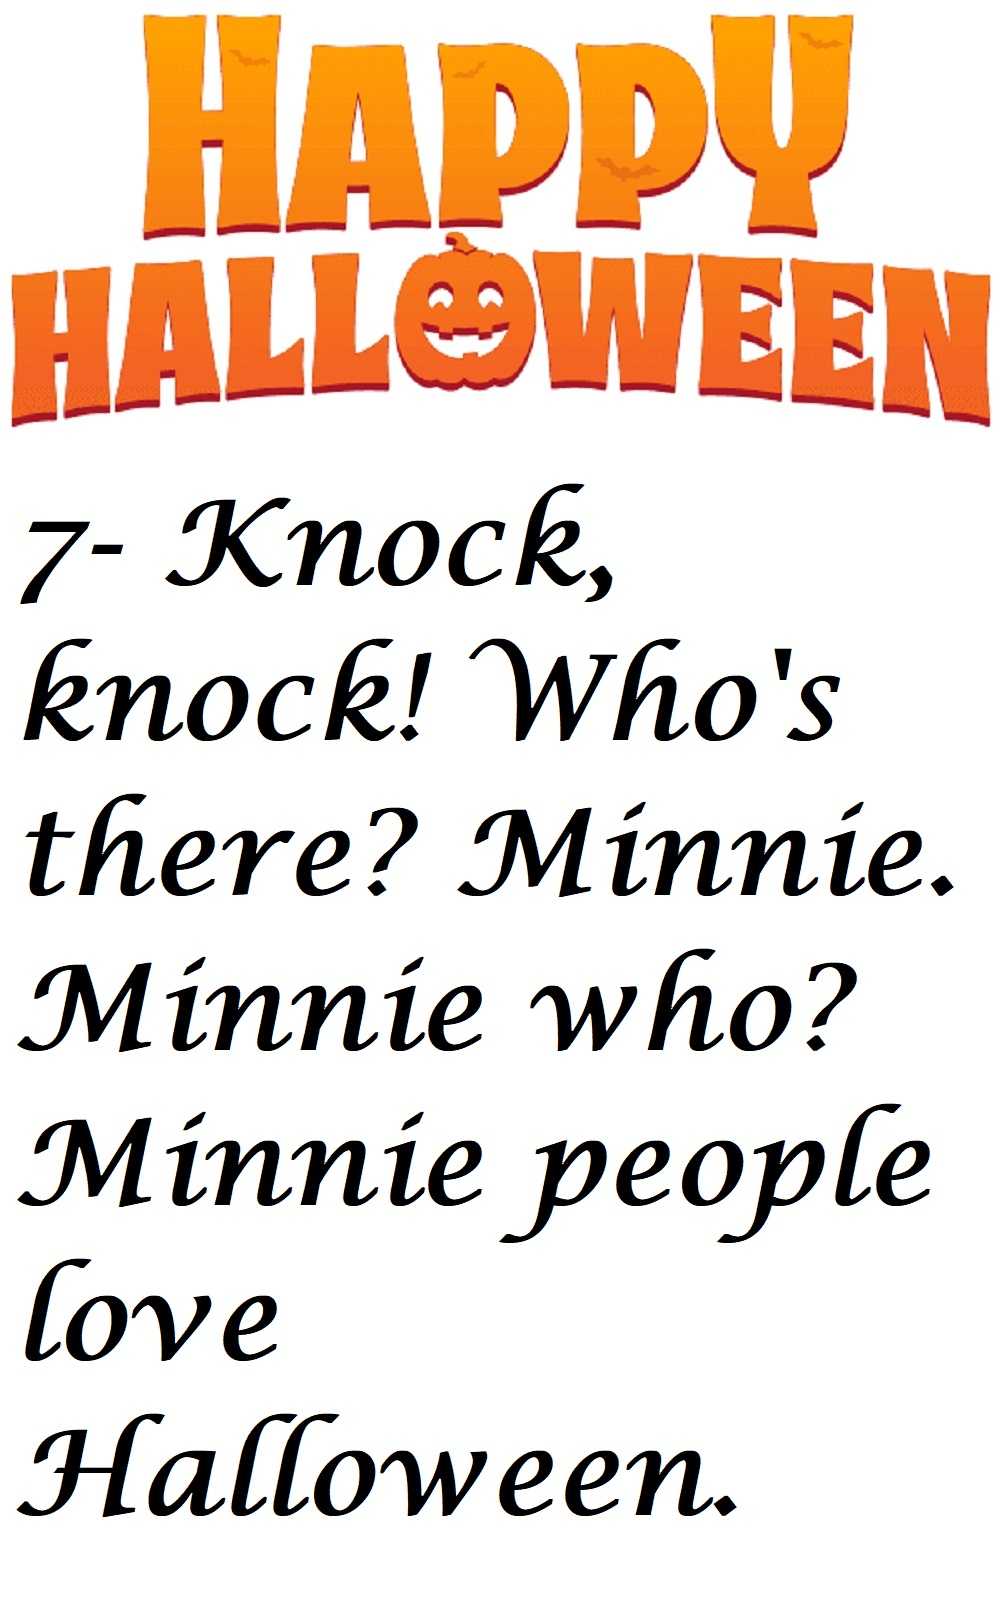 7 Halloween knock knock jokes - 17 Funny Halloween knock-knock Jokes For Kids And Adults